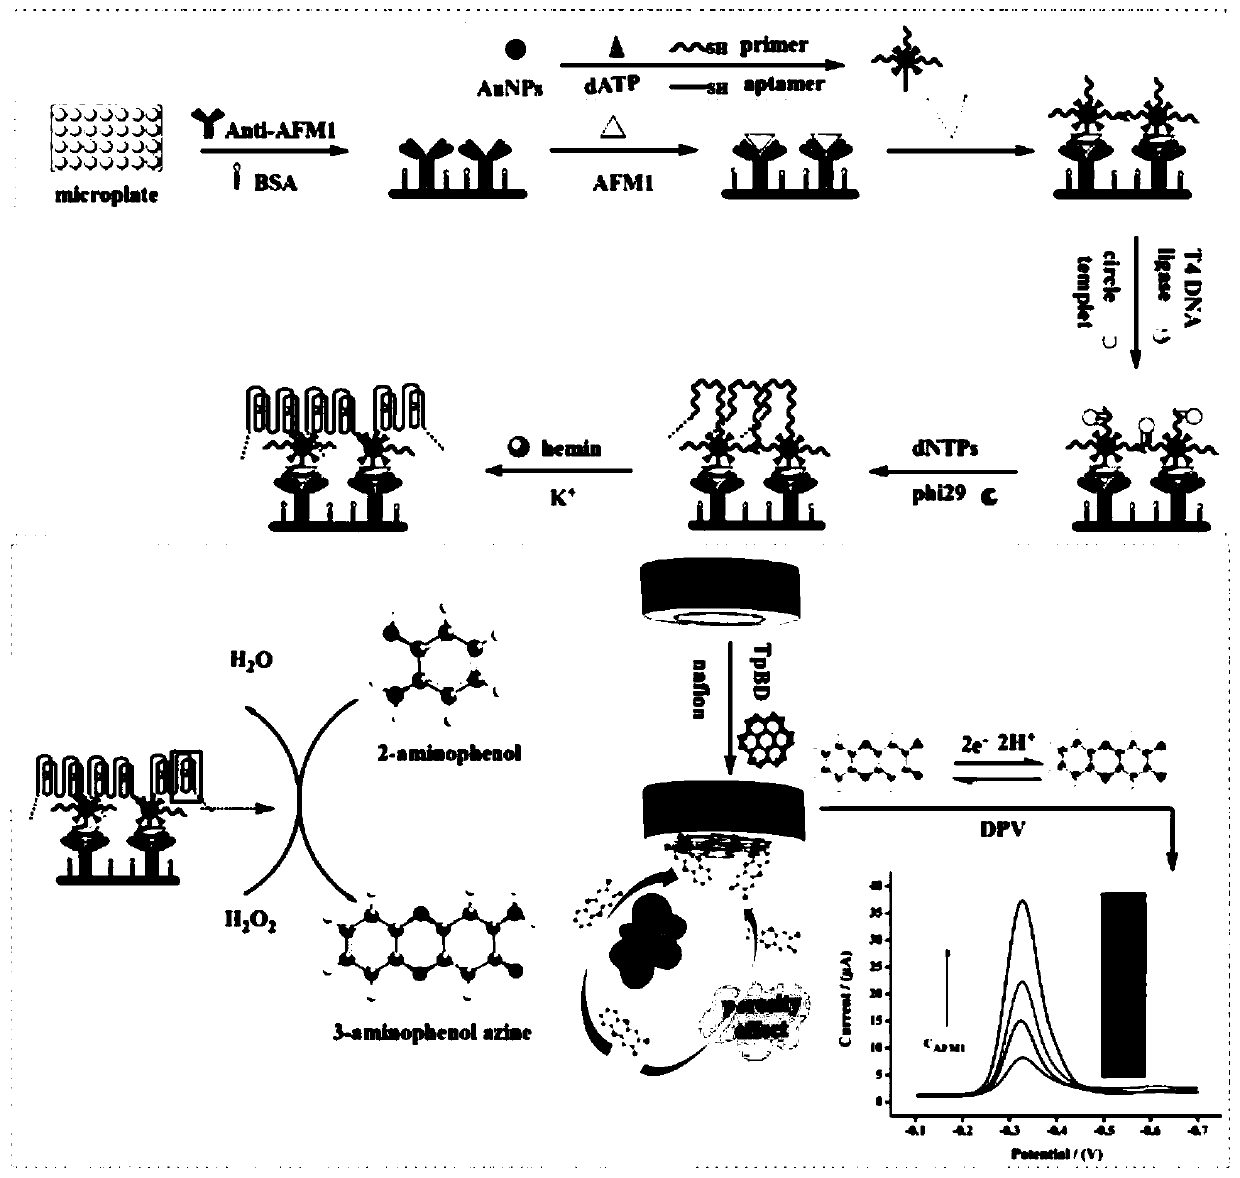 Rolling circle amplification DNA enzyme and covalent organic framework-based electrochemical-ELISA immunosensor